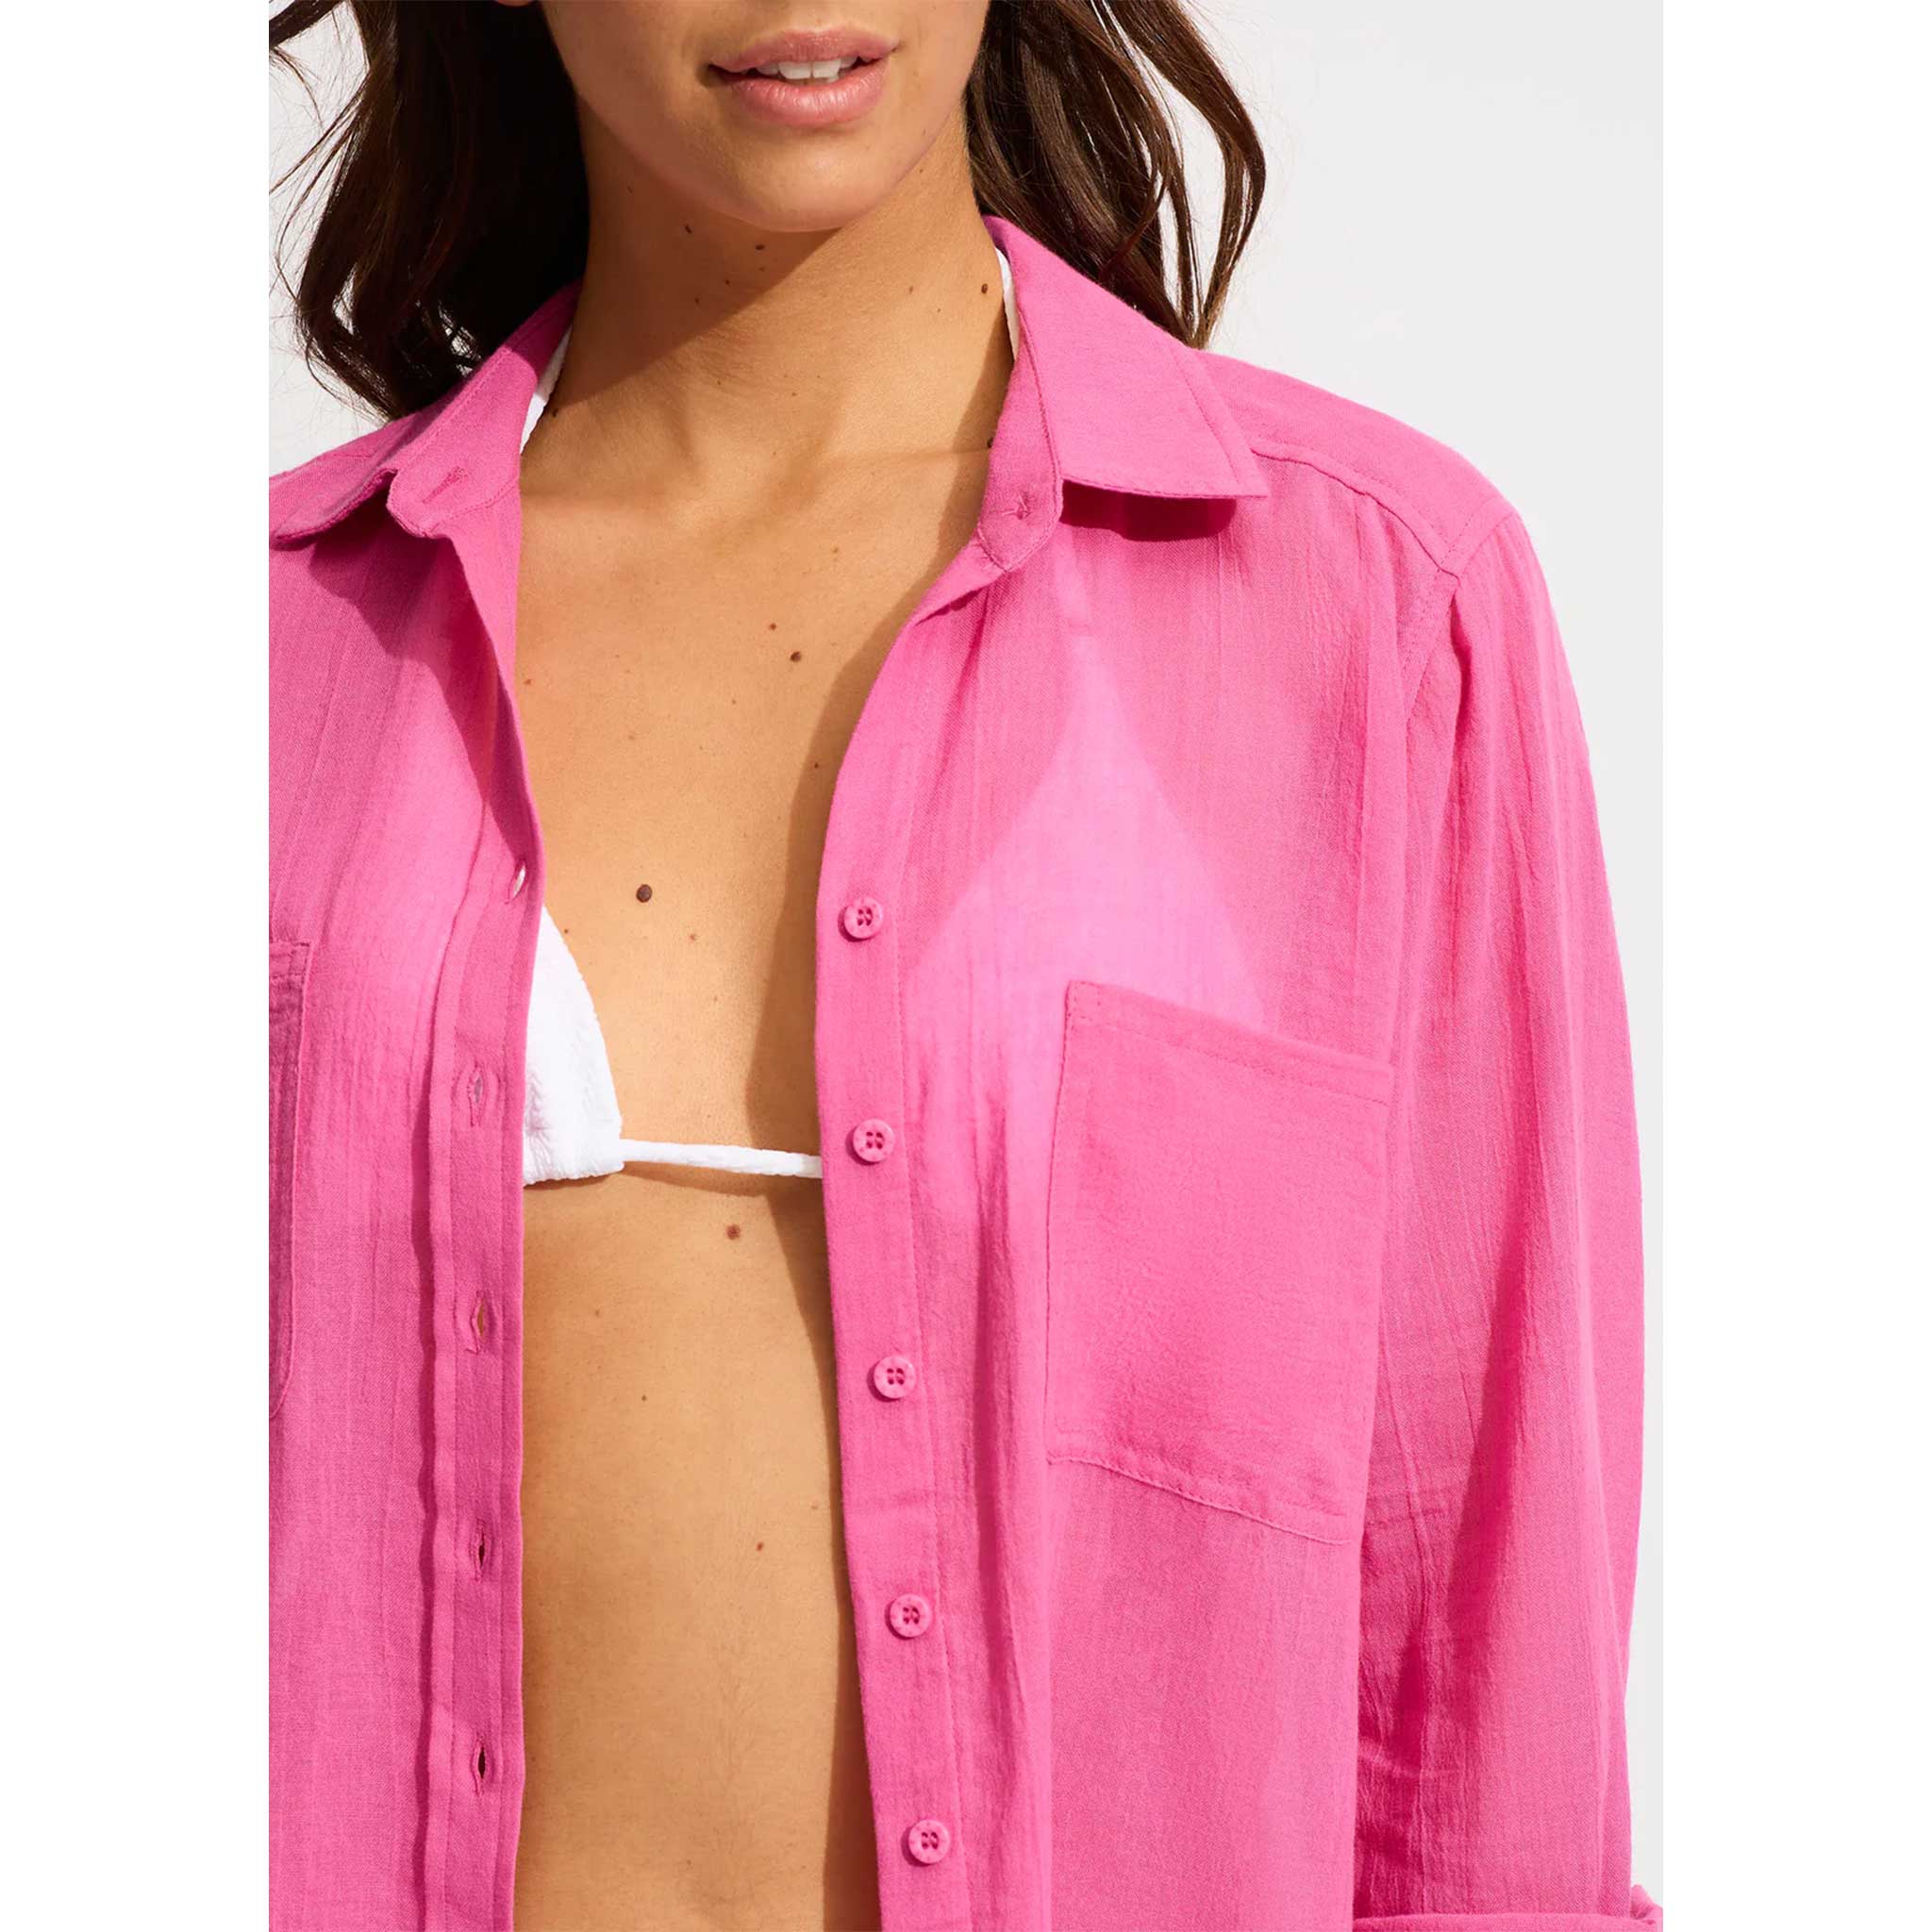 Breeze Beach Shirt in Powder Paradise Pink